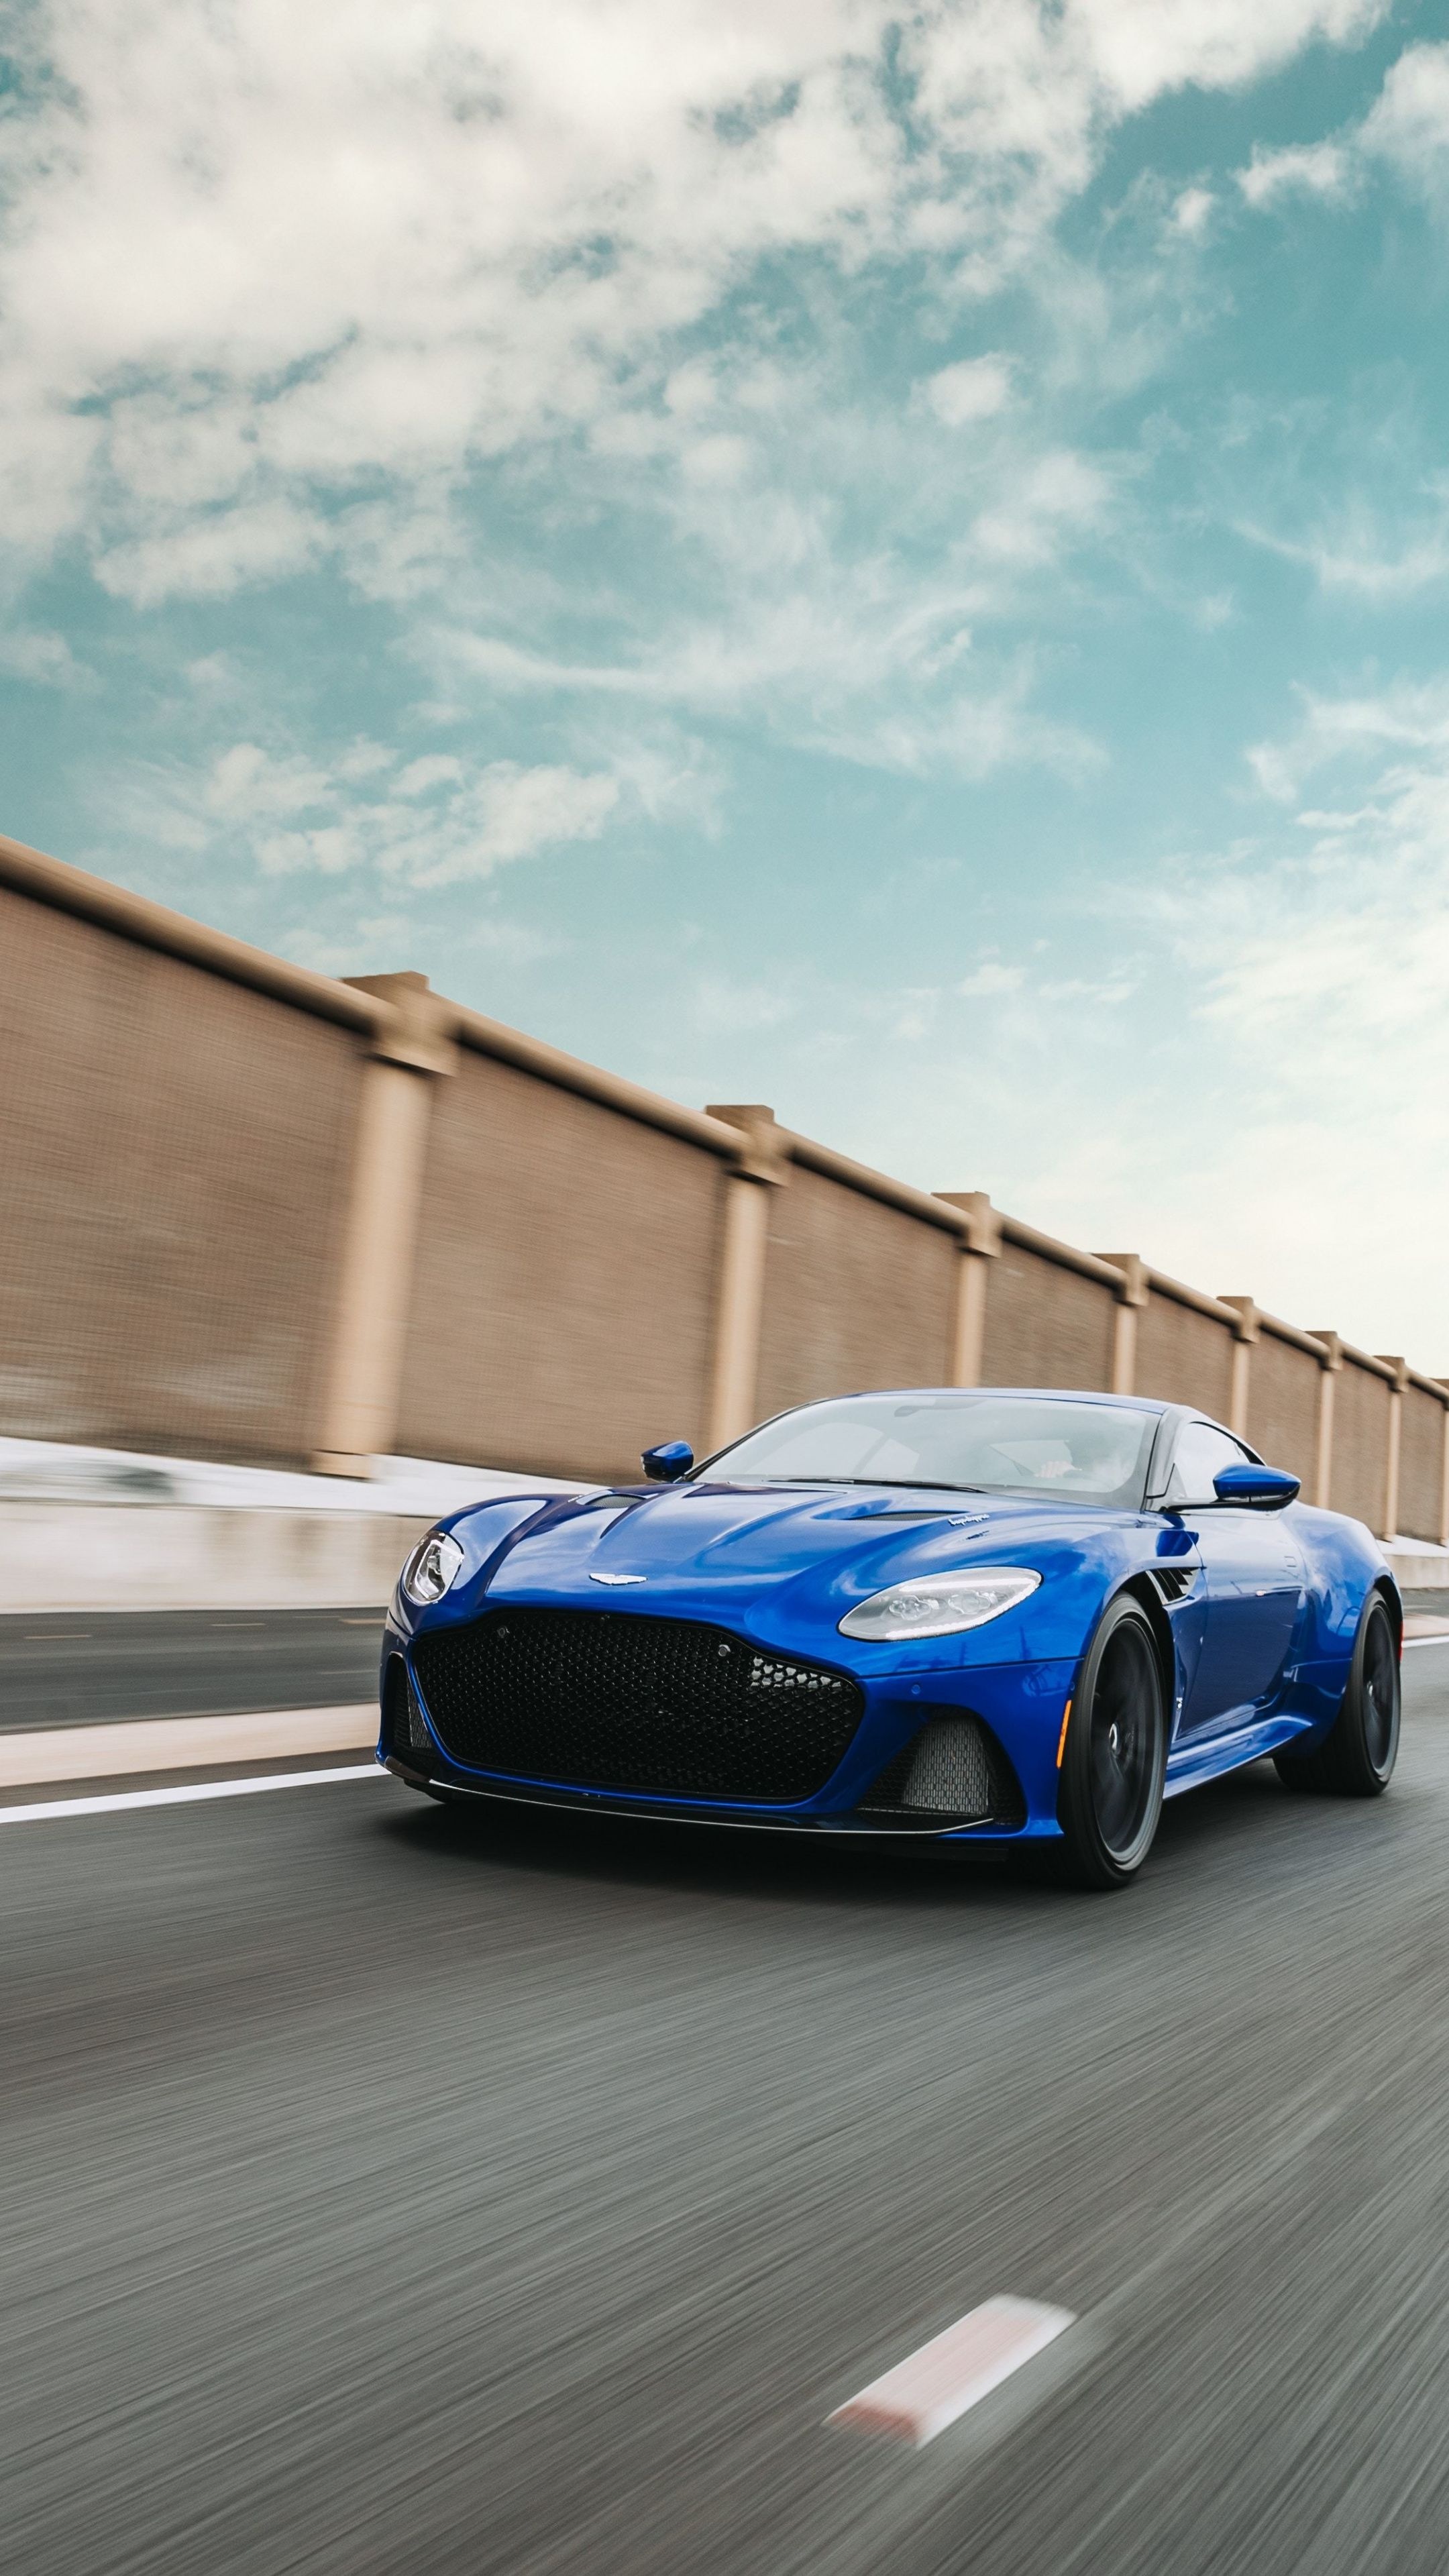 Aston Martin Vantage, Blue sports car delight, Stunning wallpaper background, Automotive elegance, 2160x3840 4K Phone